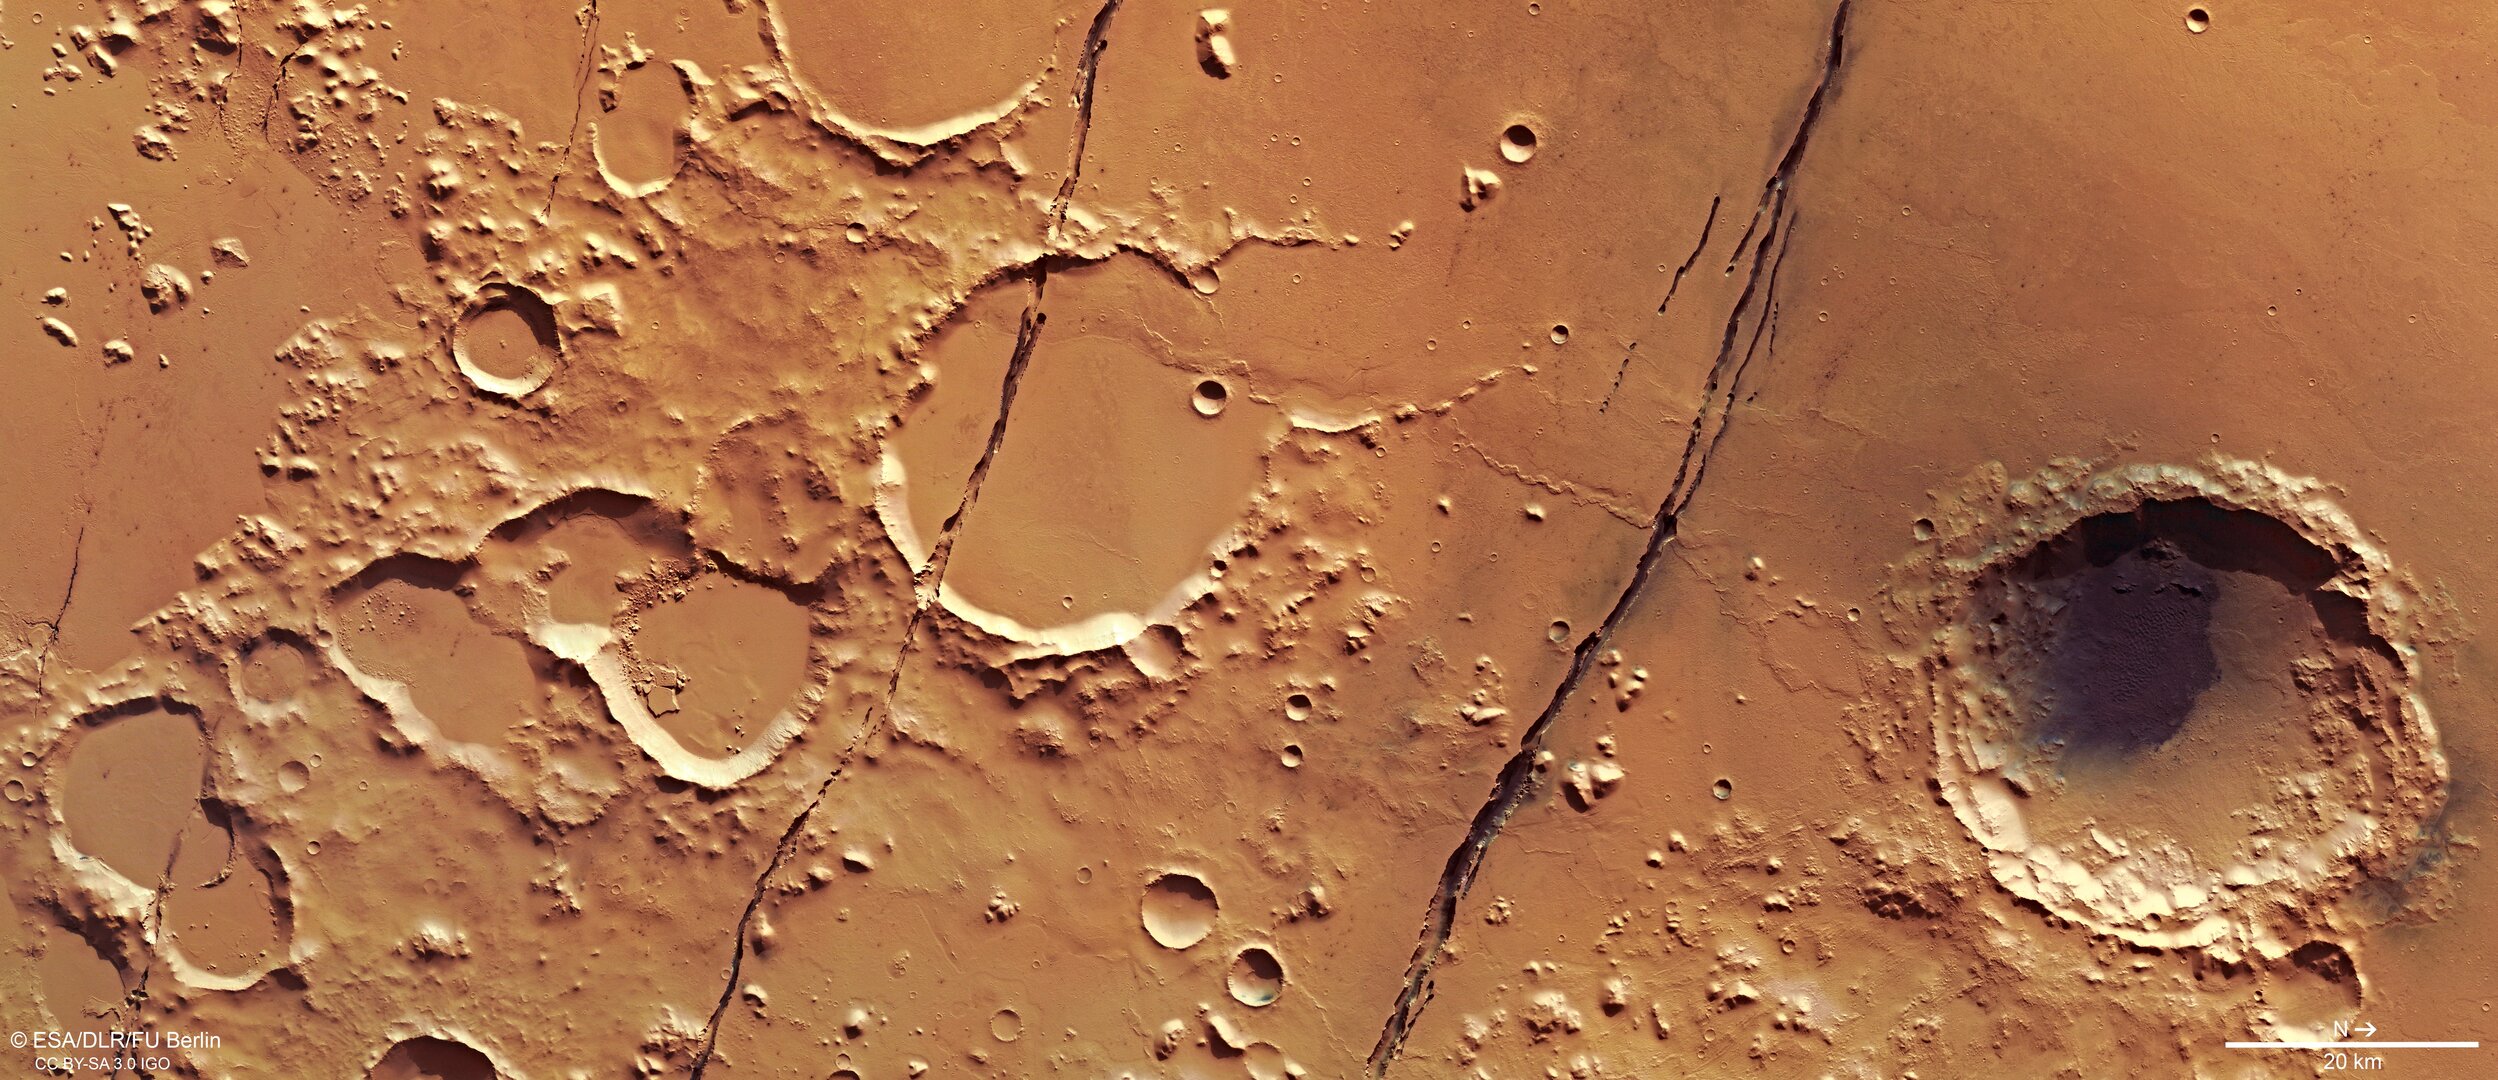 Snímek Cerberus Fossae získaný sondou Mars Express